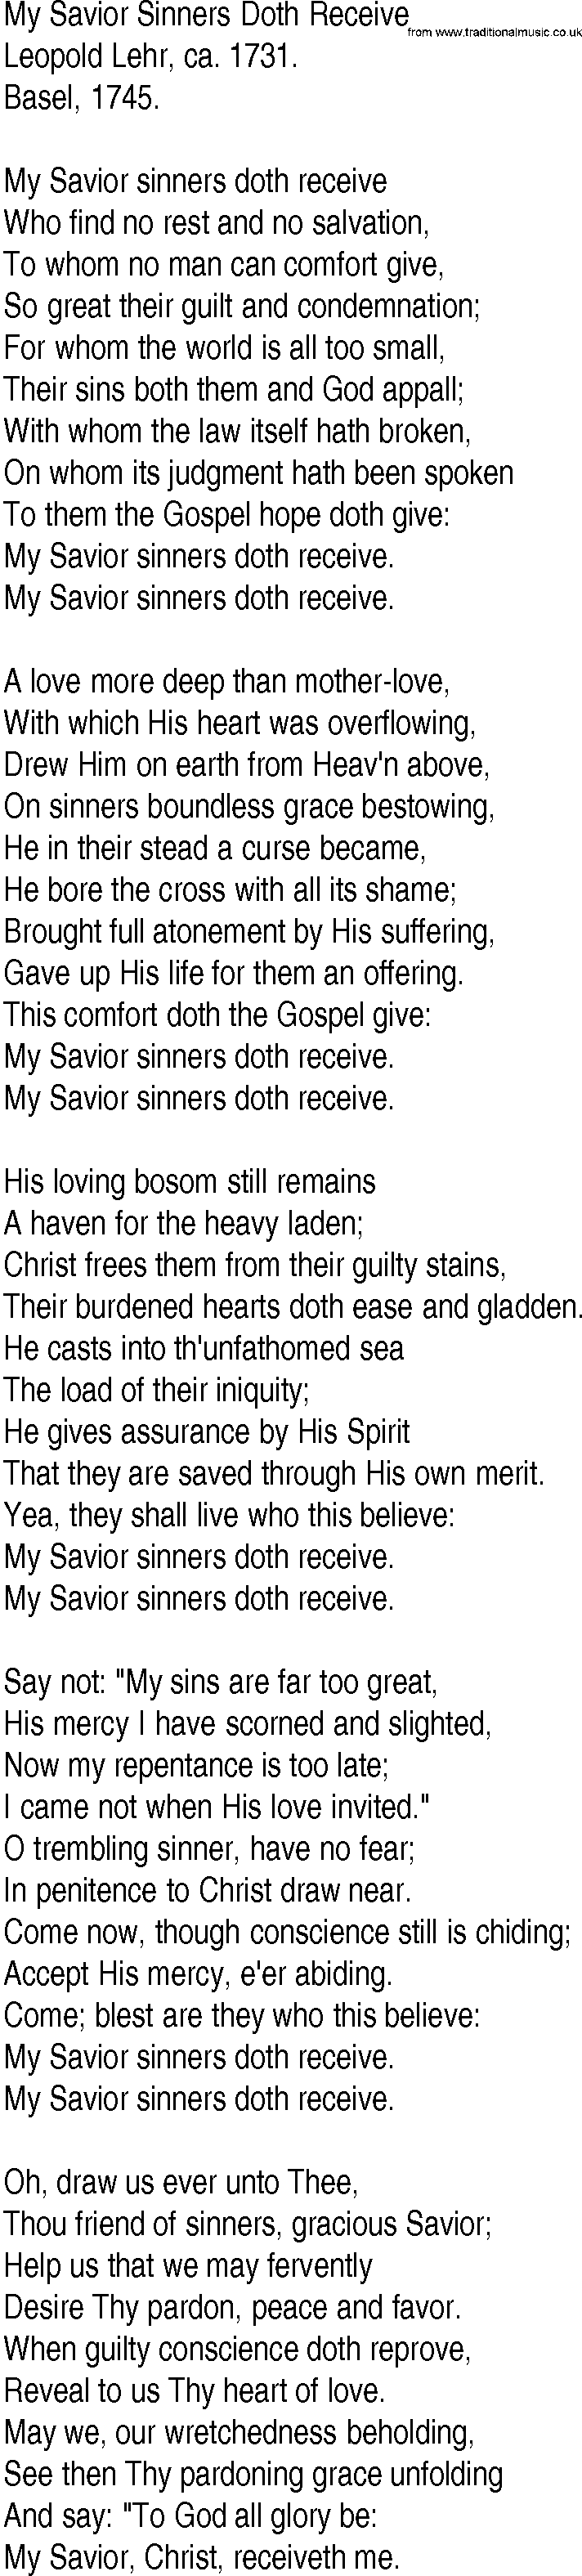 Hymn and Gospel Song: My Savior Sinners Doth Receive by Leopold Lehr ca lyrics